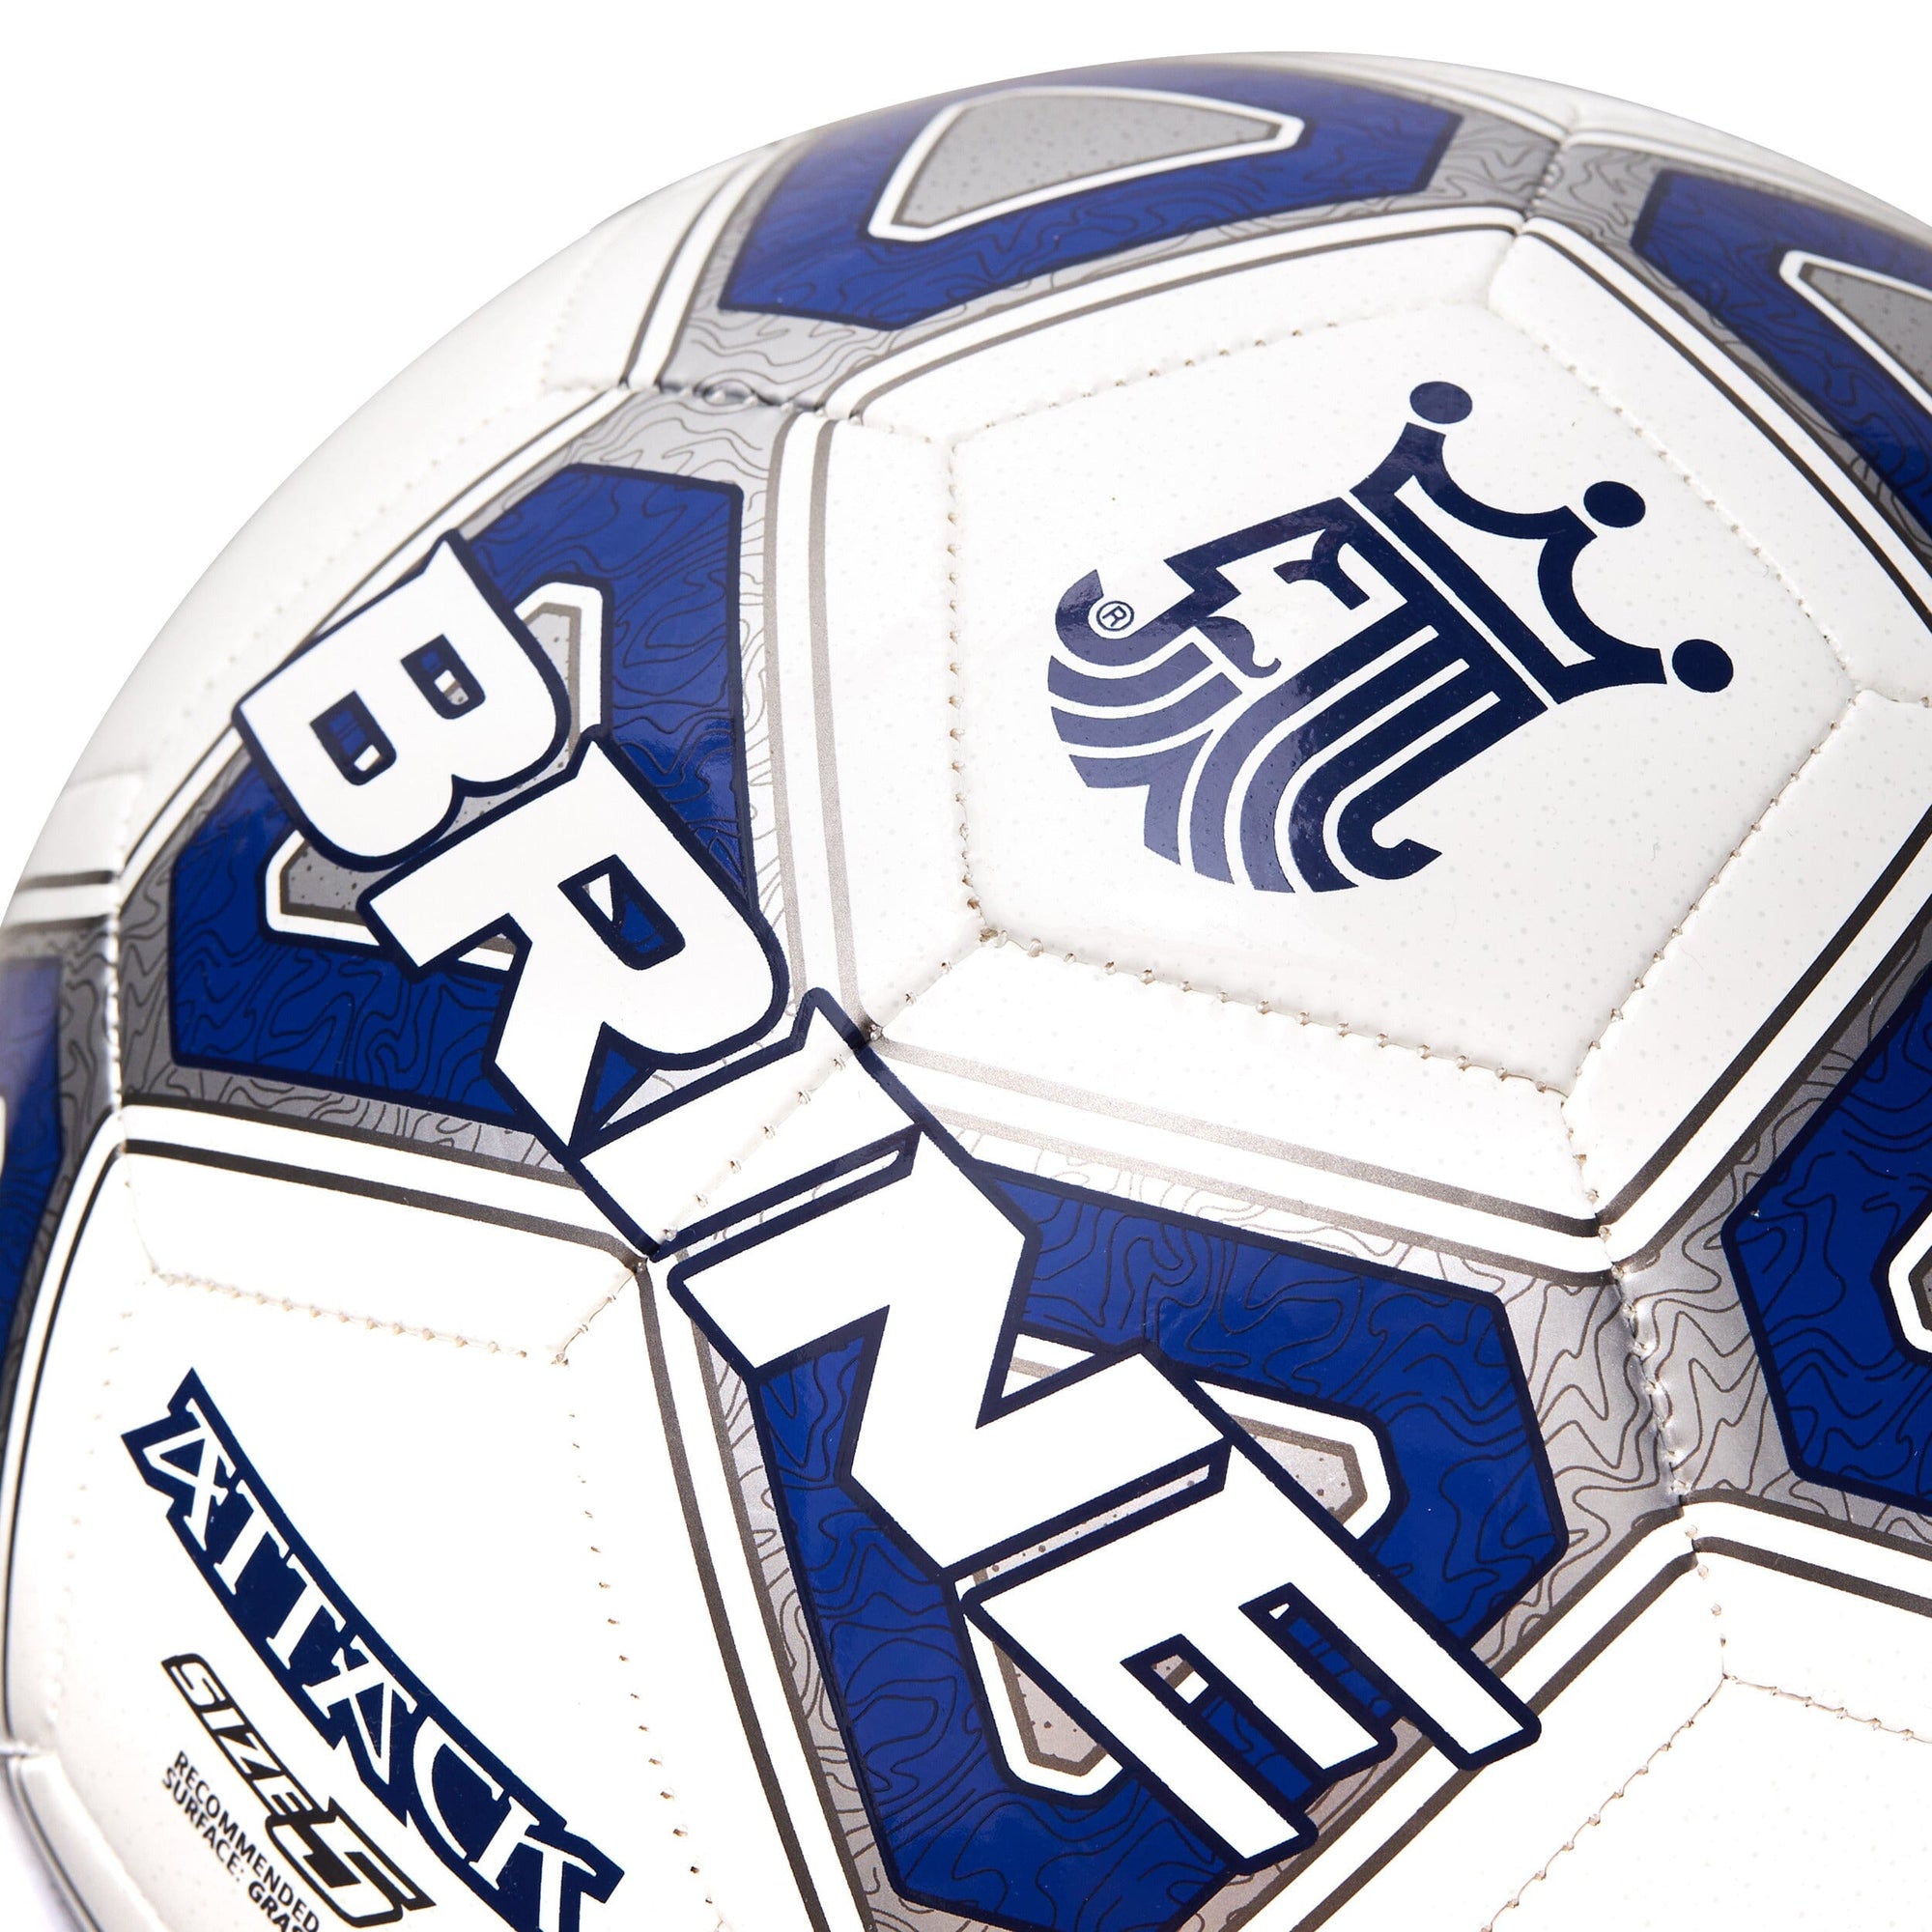 Brine Attack Soccer Ball | FB23313G Soccer Ball Brine 